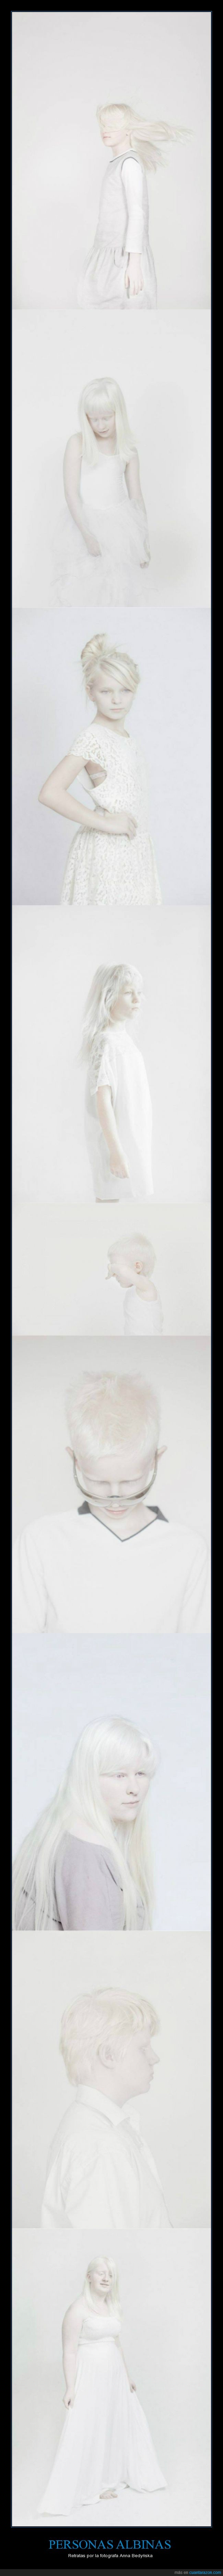 albino,papel,blanco,fotografa,me siento negra,brillo,Anna Bedynska